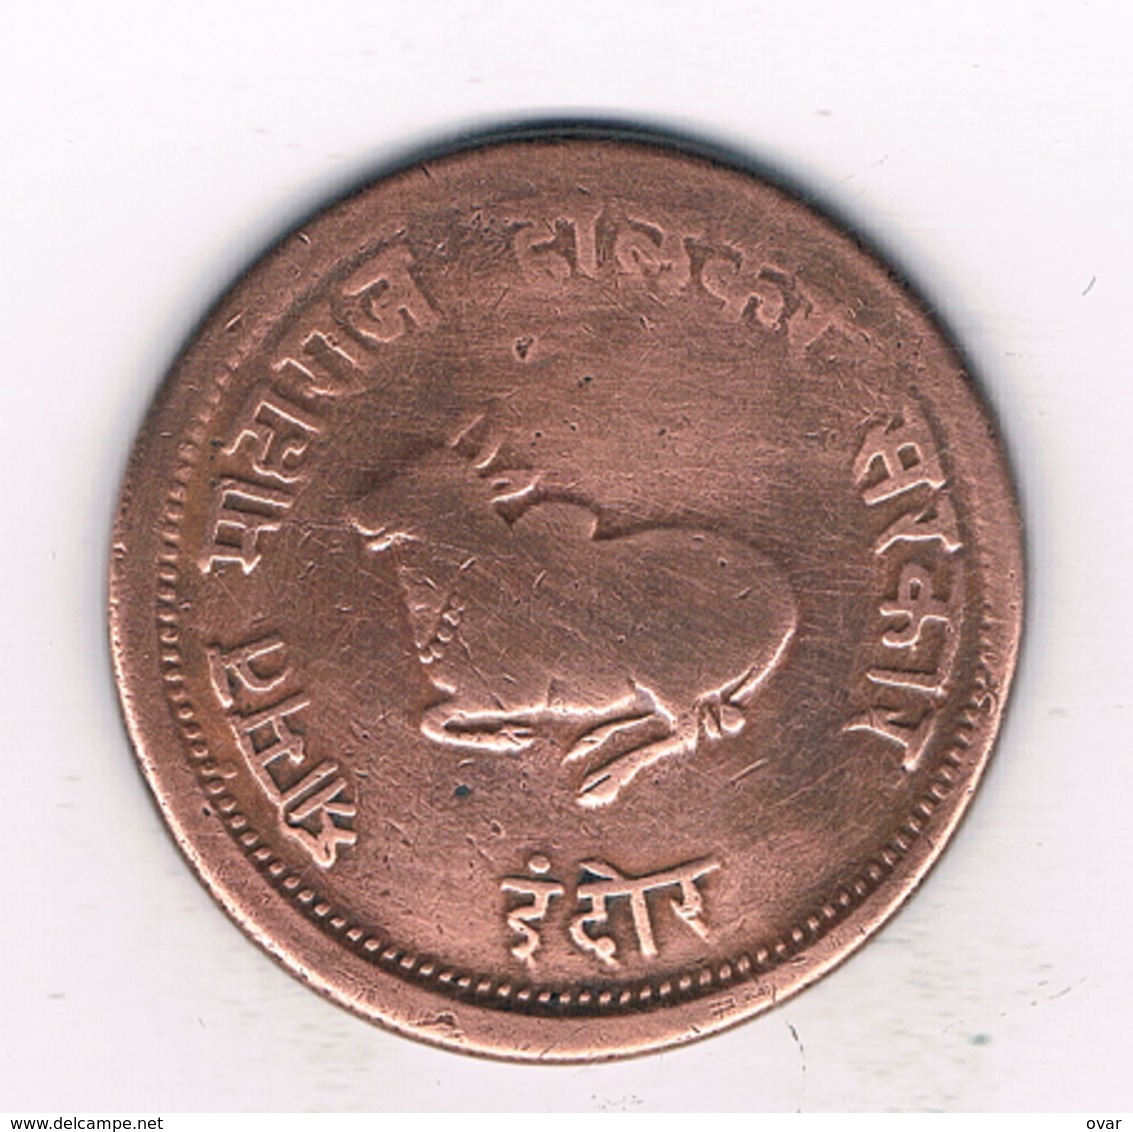 1/4 ANNA 1887 INDORE STATE INDIA /9396/ - India